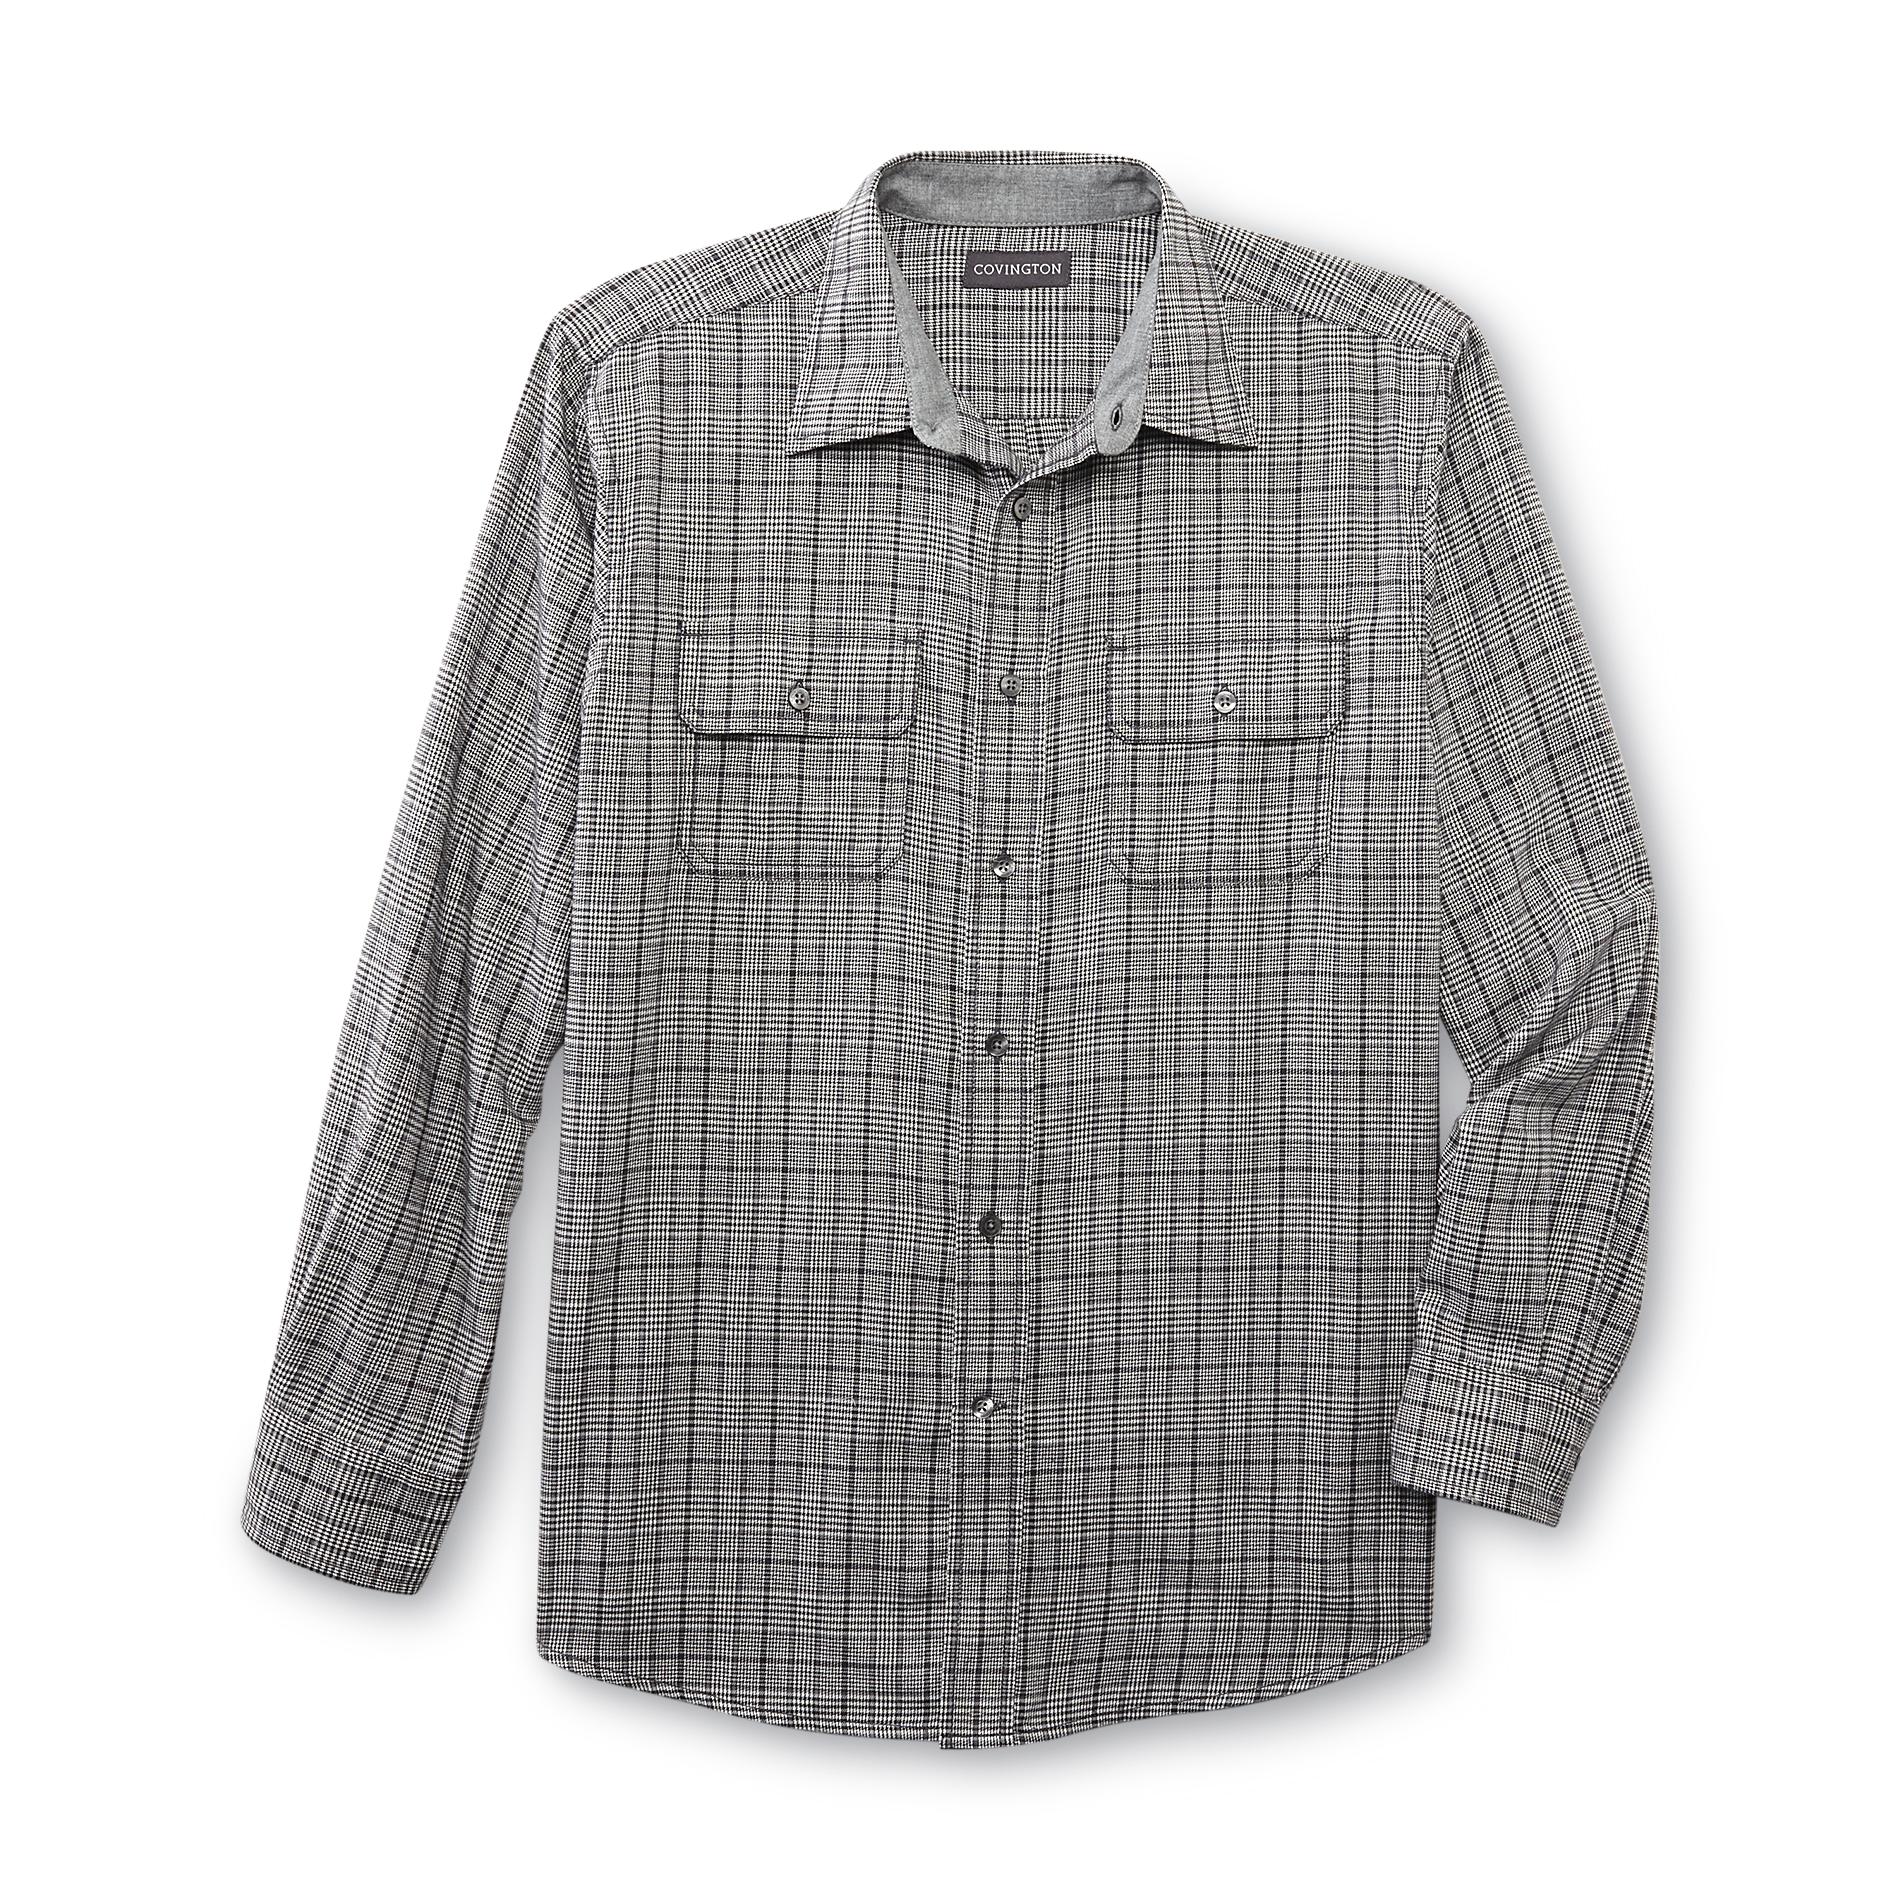 Covington Men's Long-Sleeve Casual Shirt - Plaid